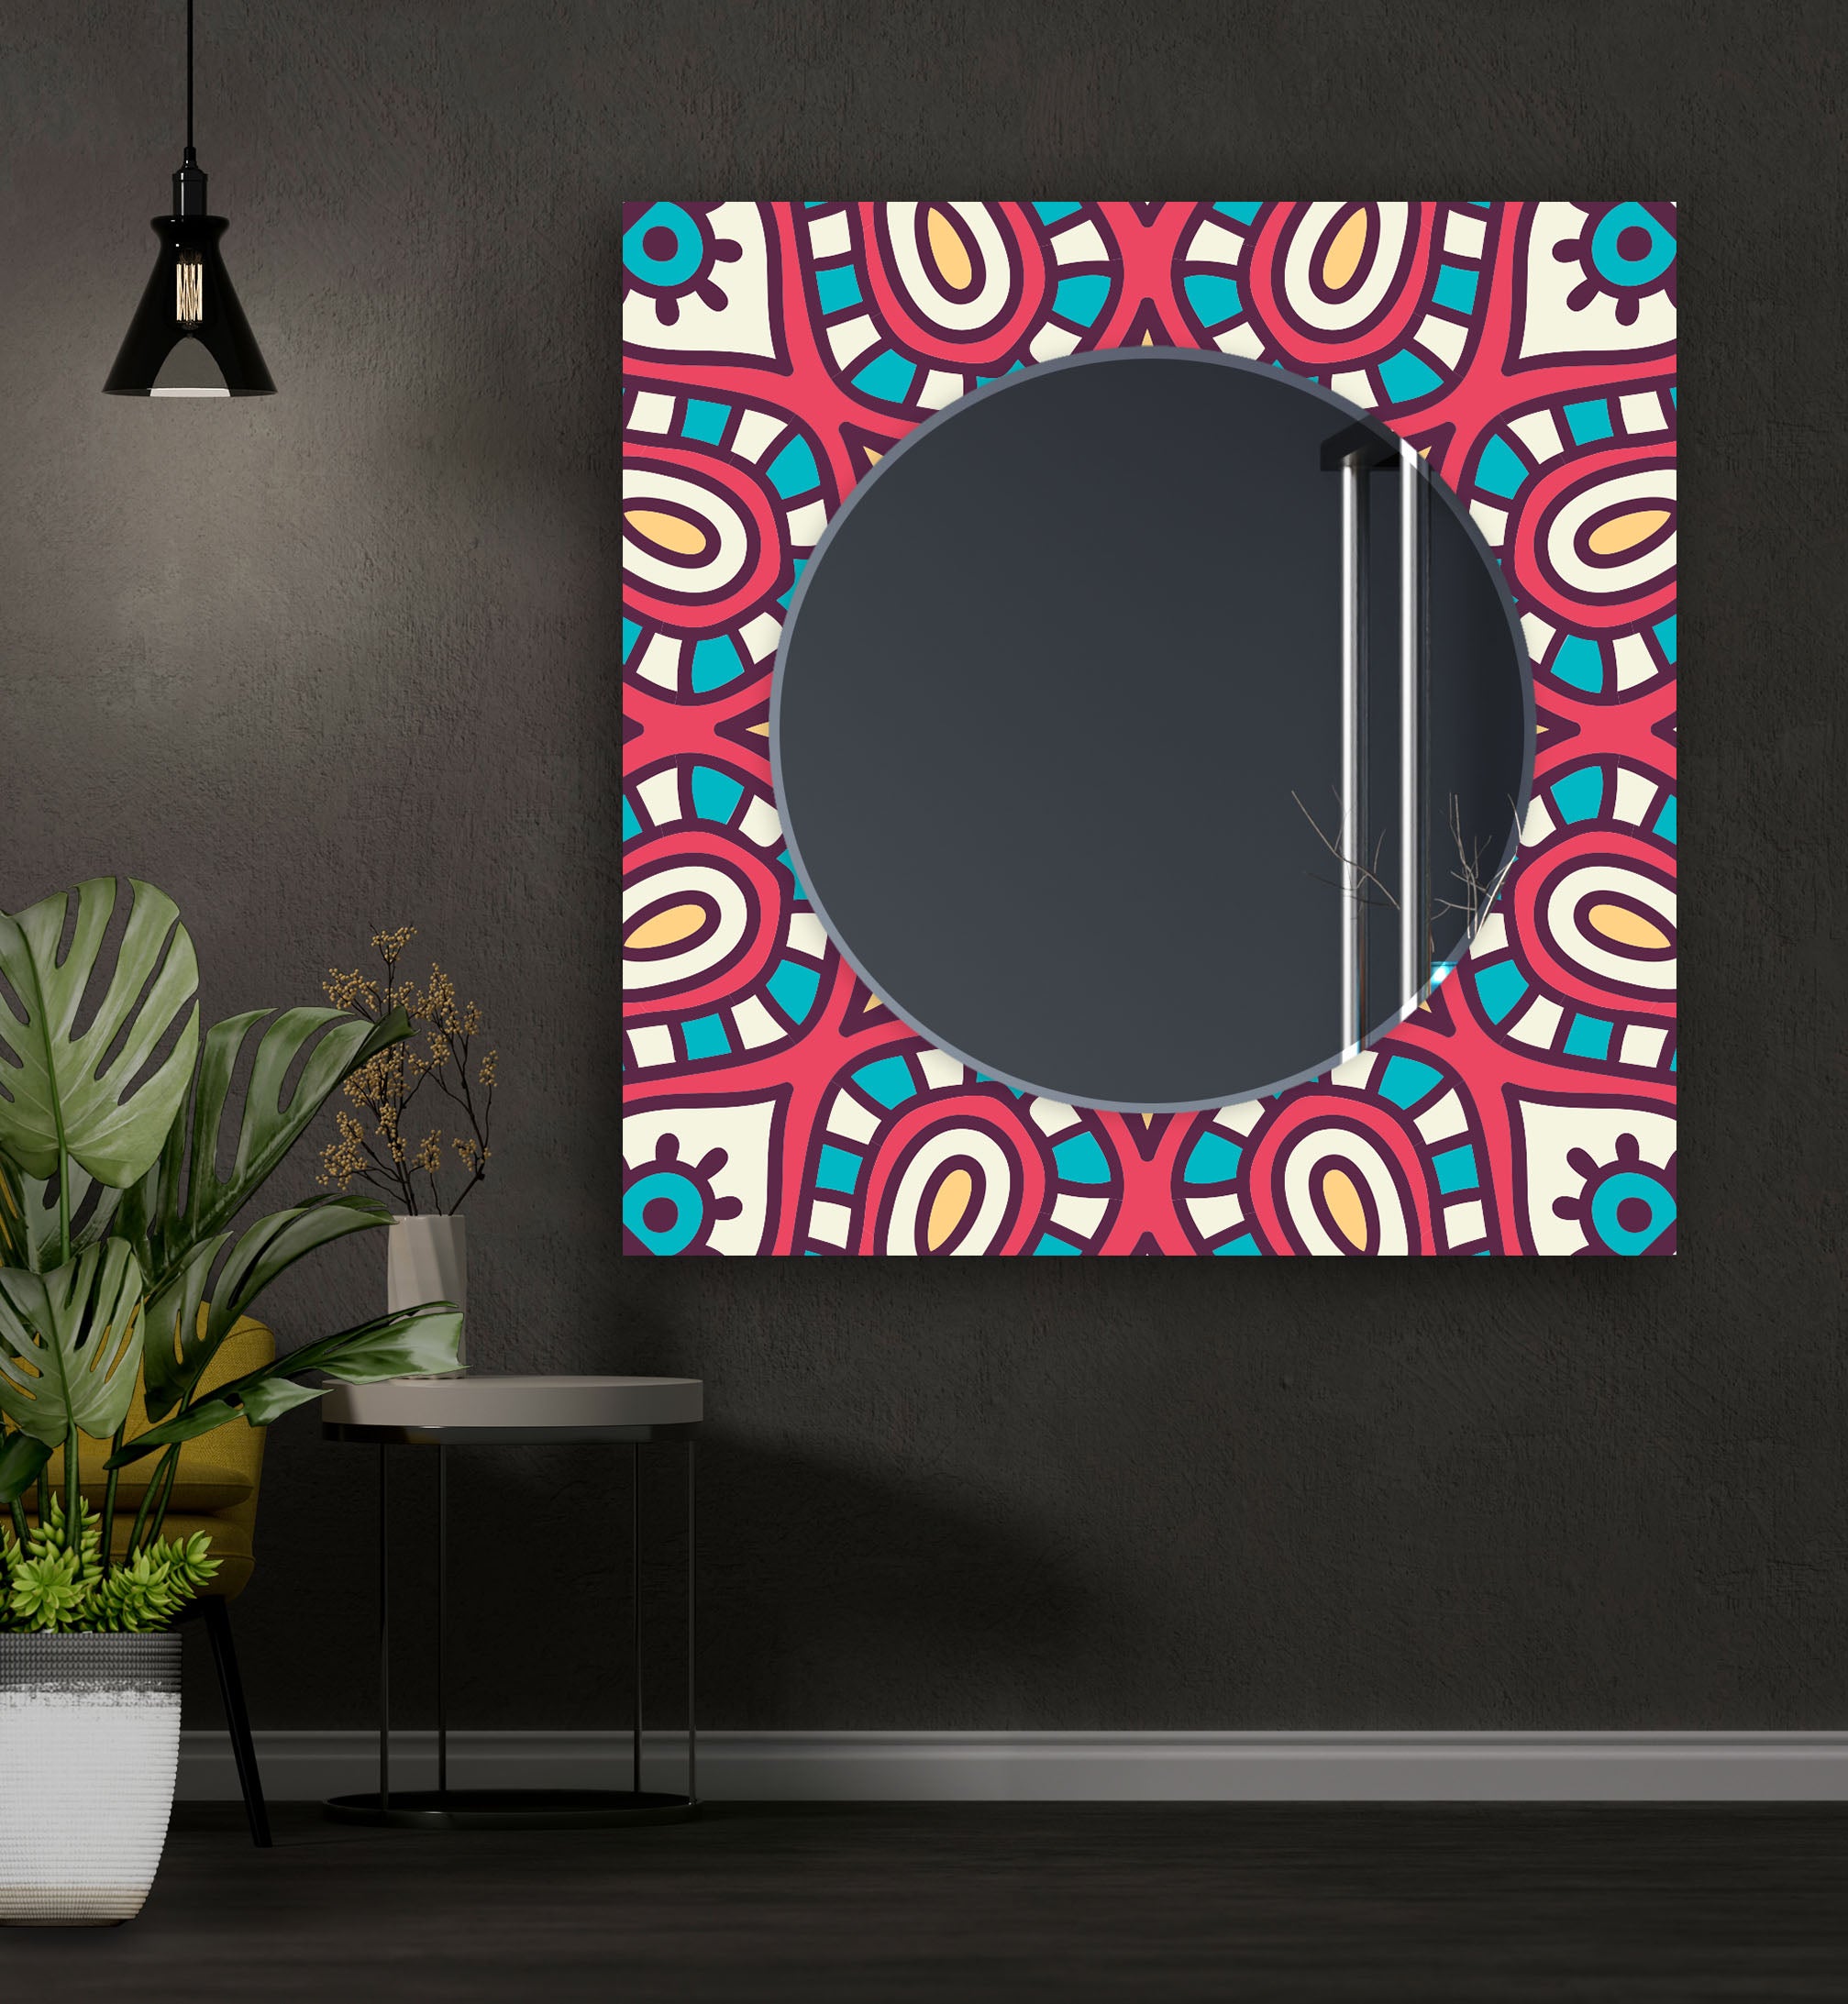 Mandala Round Tempered Glass Wall Mirror